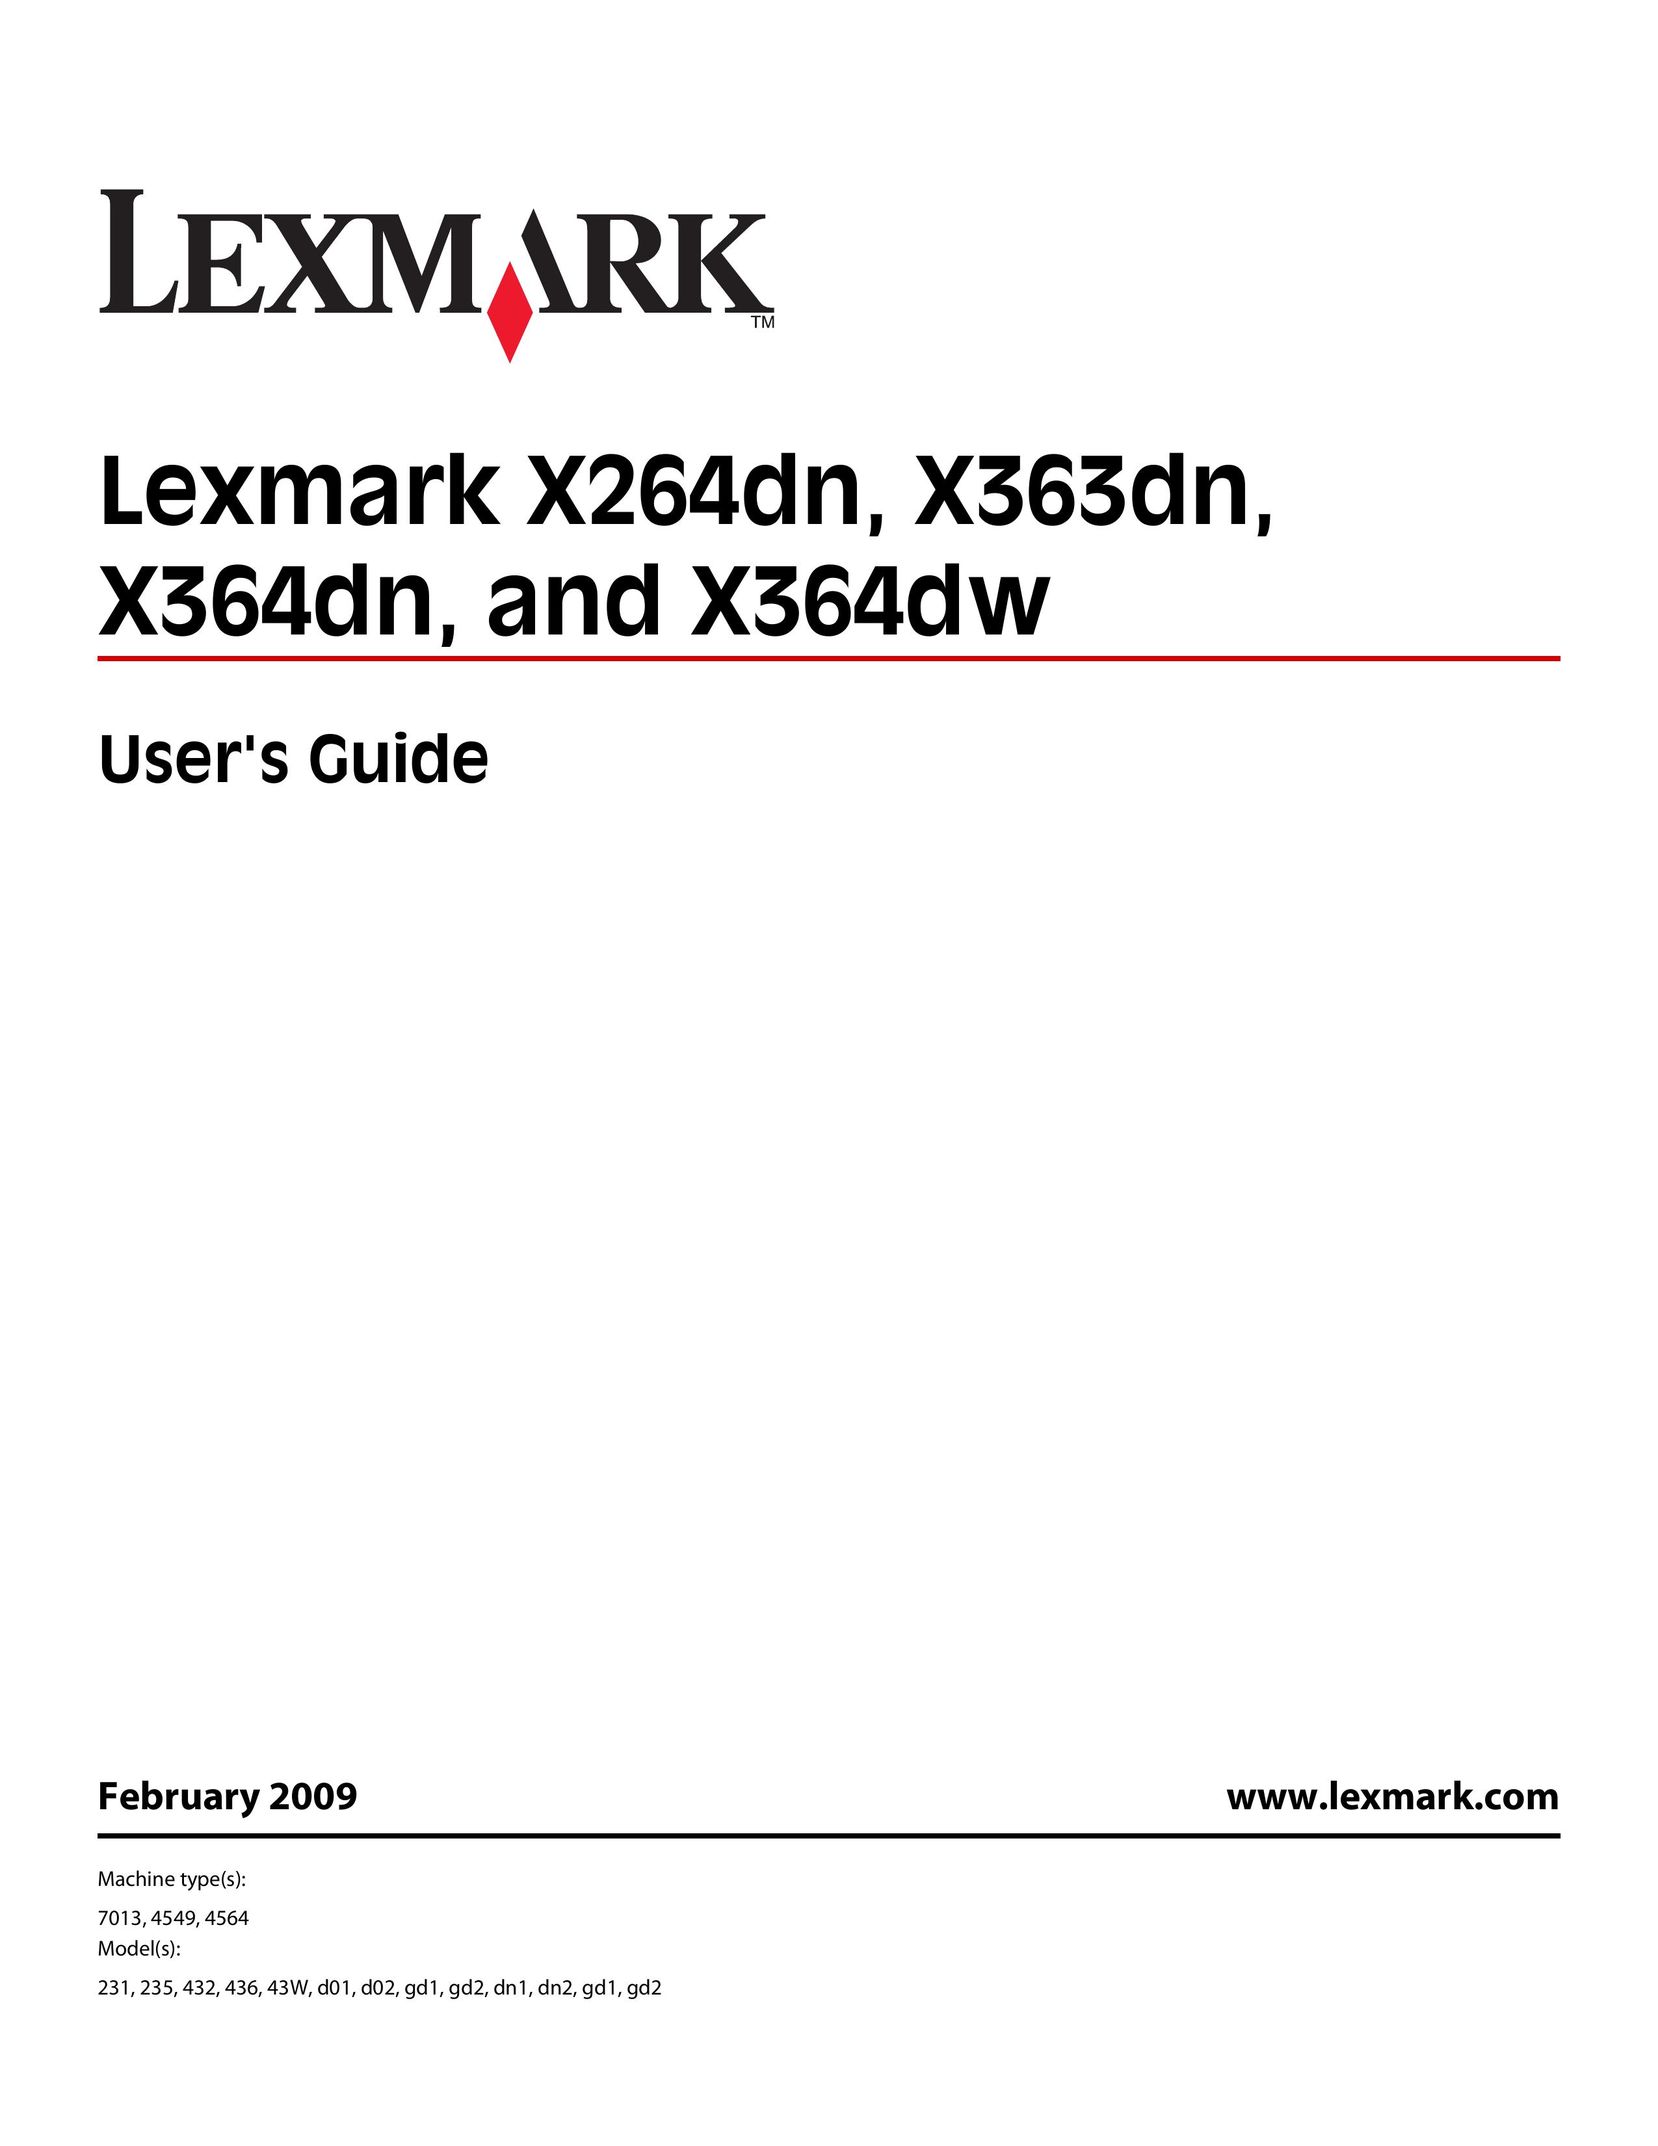 Lexmark 235 All in One Printer User Manual